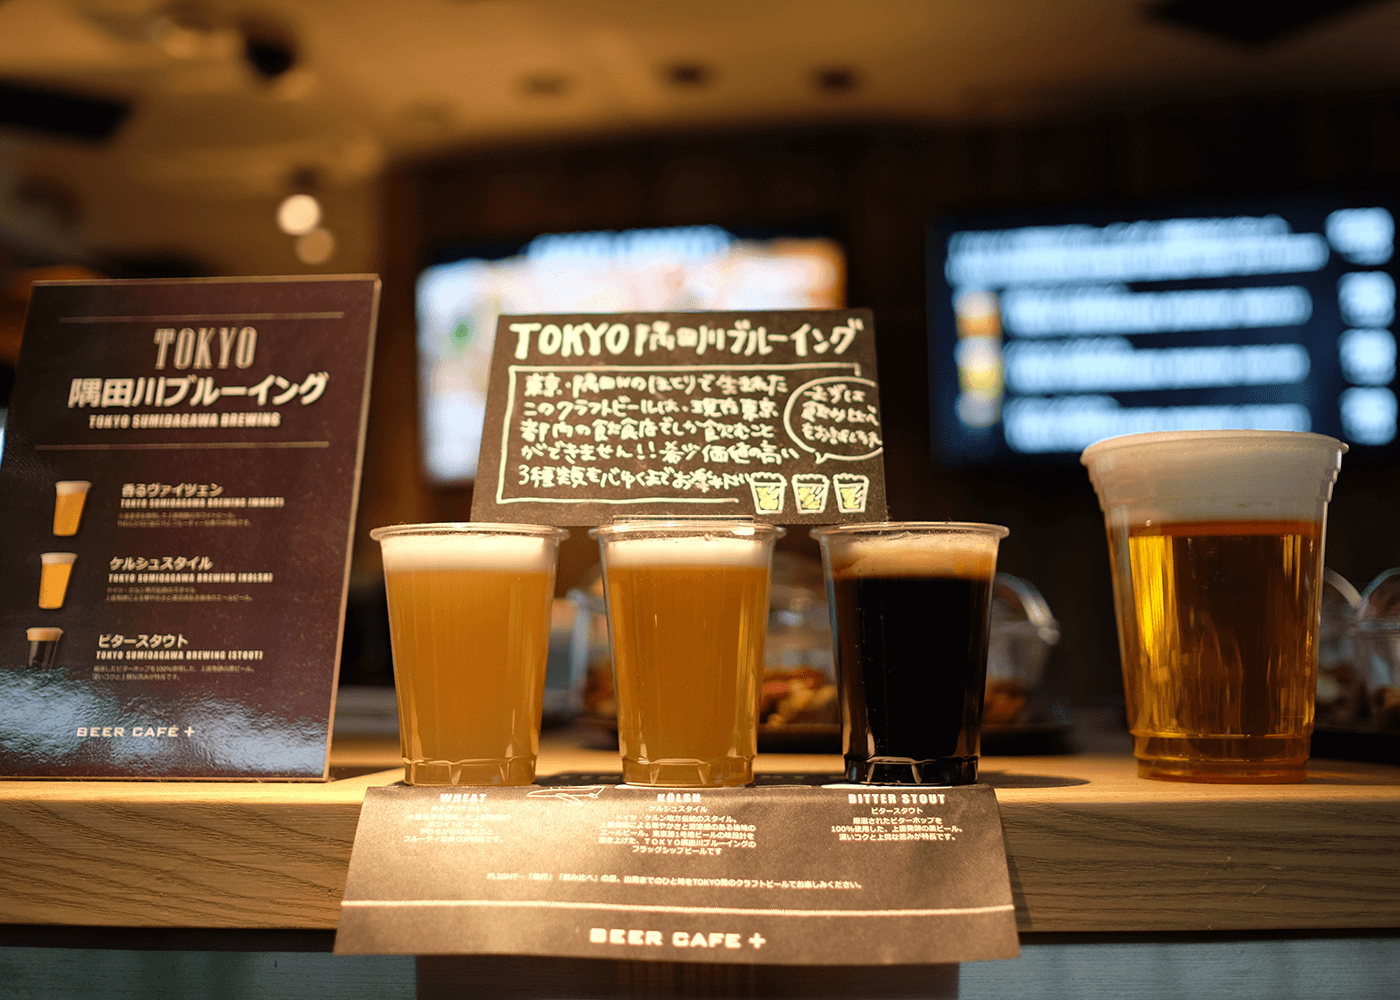 BEER CAFE＋（ビア カフェ プラス）でTOKYO墨田川ブルーイングをはじめとしたクラフトビールを気軽に楽しむ@東京, 羽田空港第2ビル